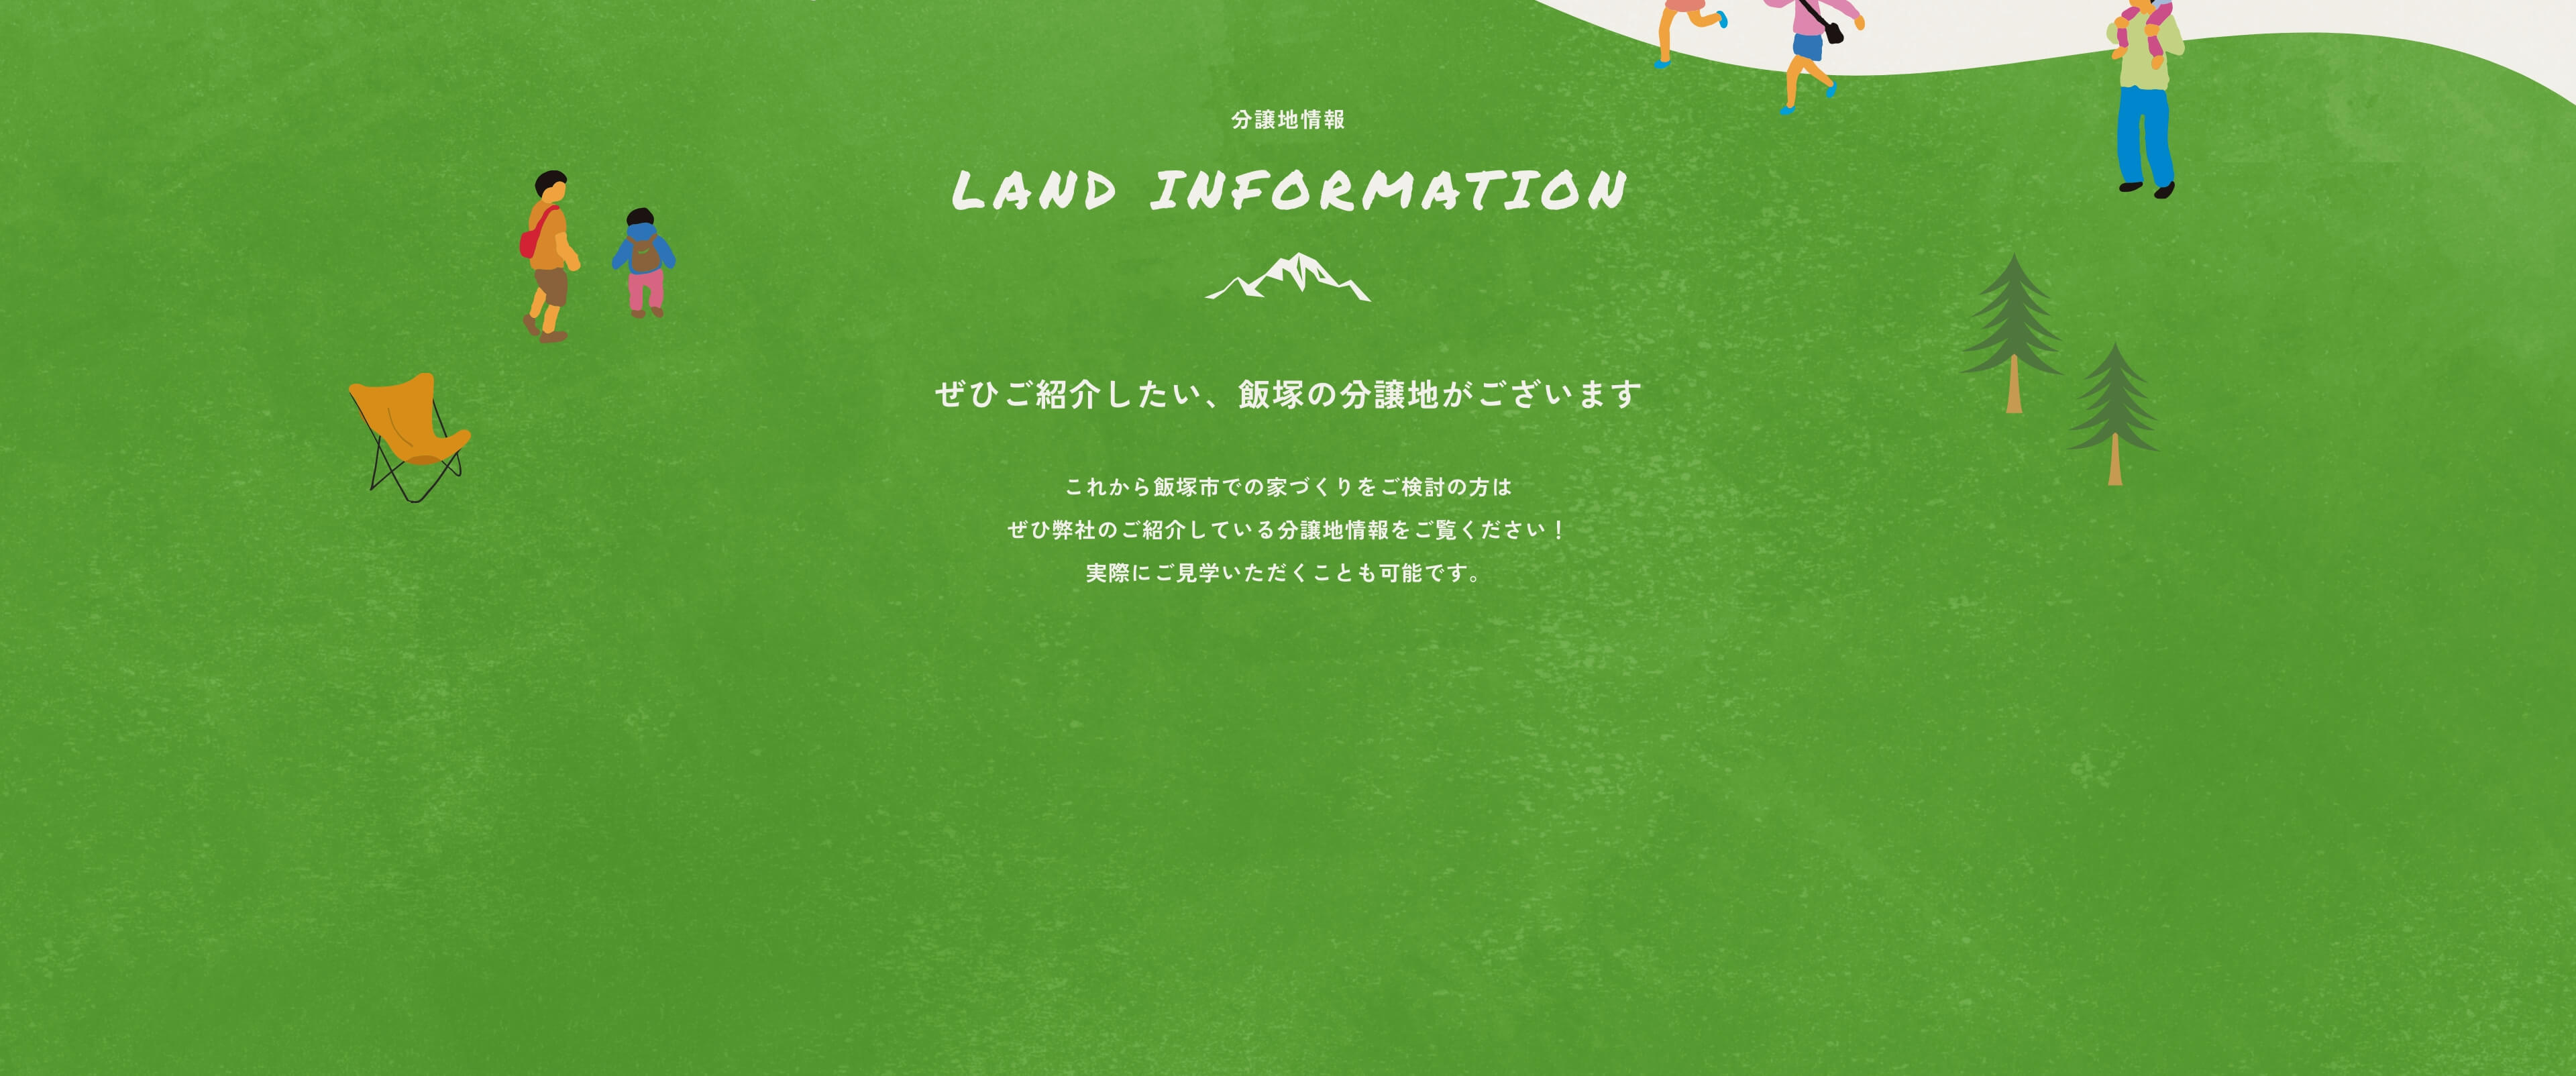 LAND INFORMATION